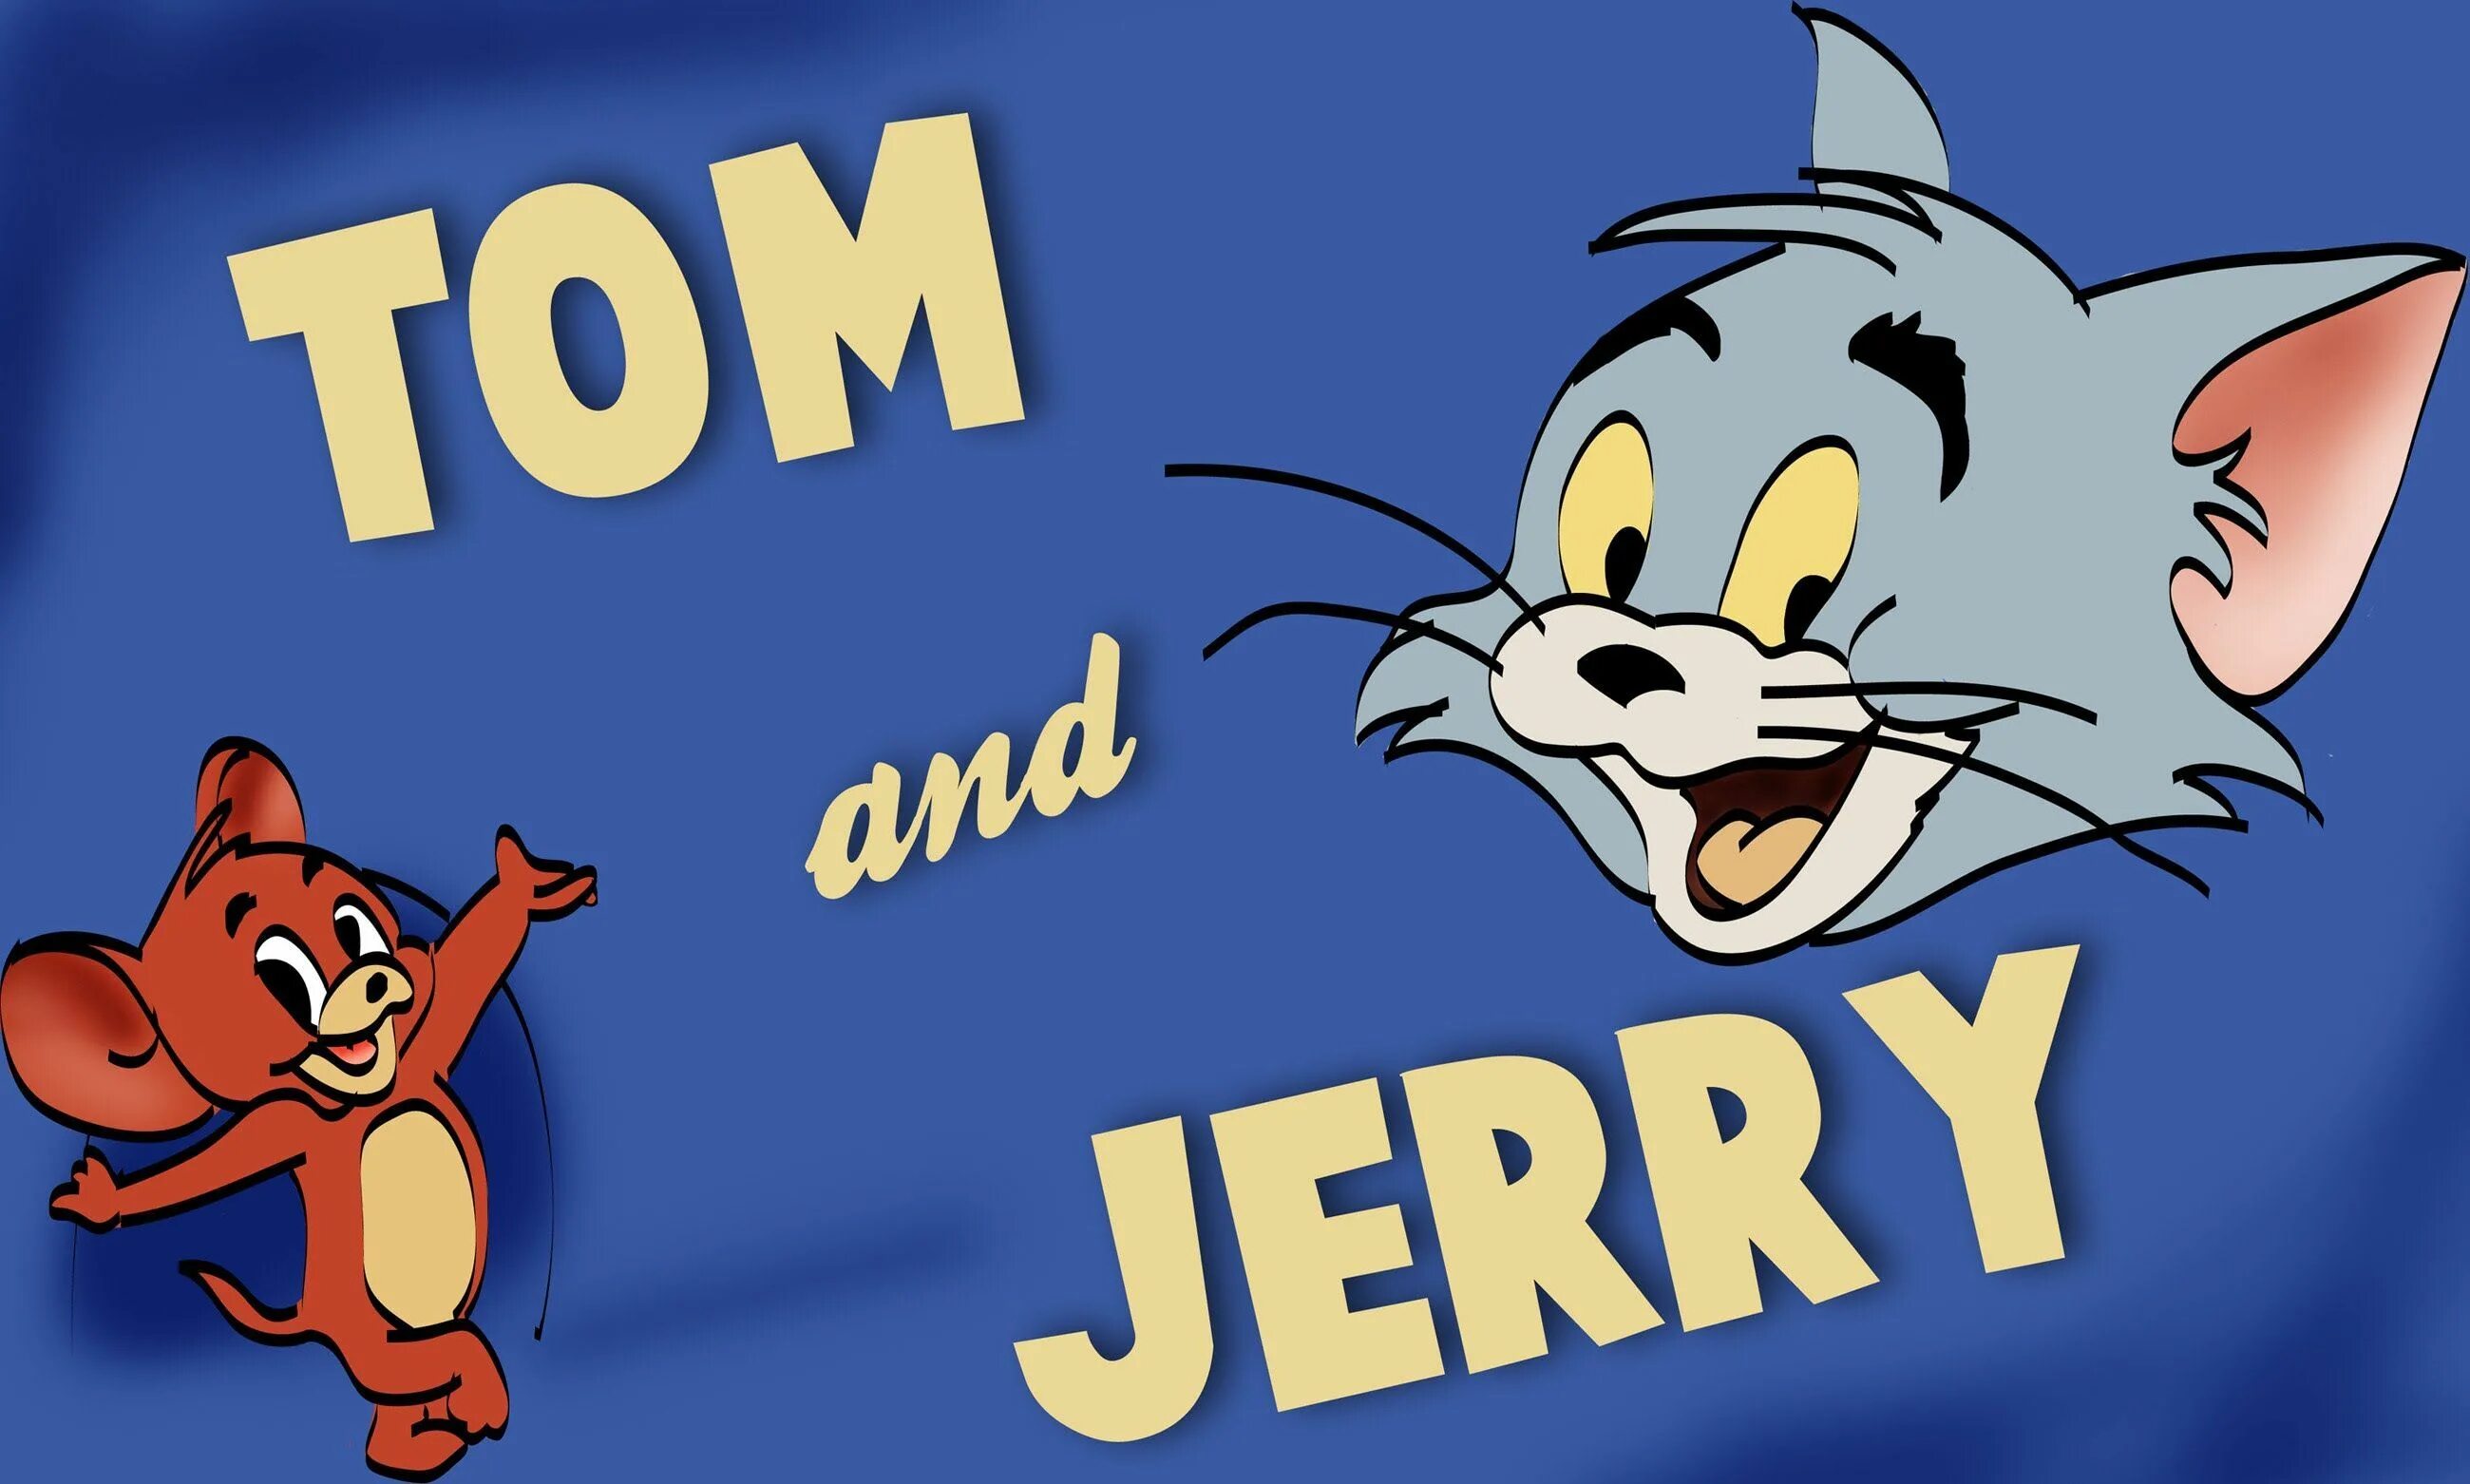 Monday tom. Tom and Jerry. Том и Джерри обложка мультфильма. Том и Джерри картинки. Том и Джерри Tom and Jerry.